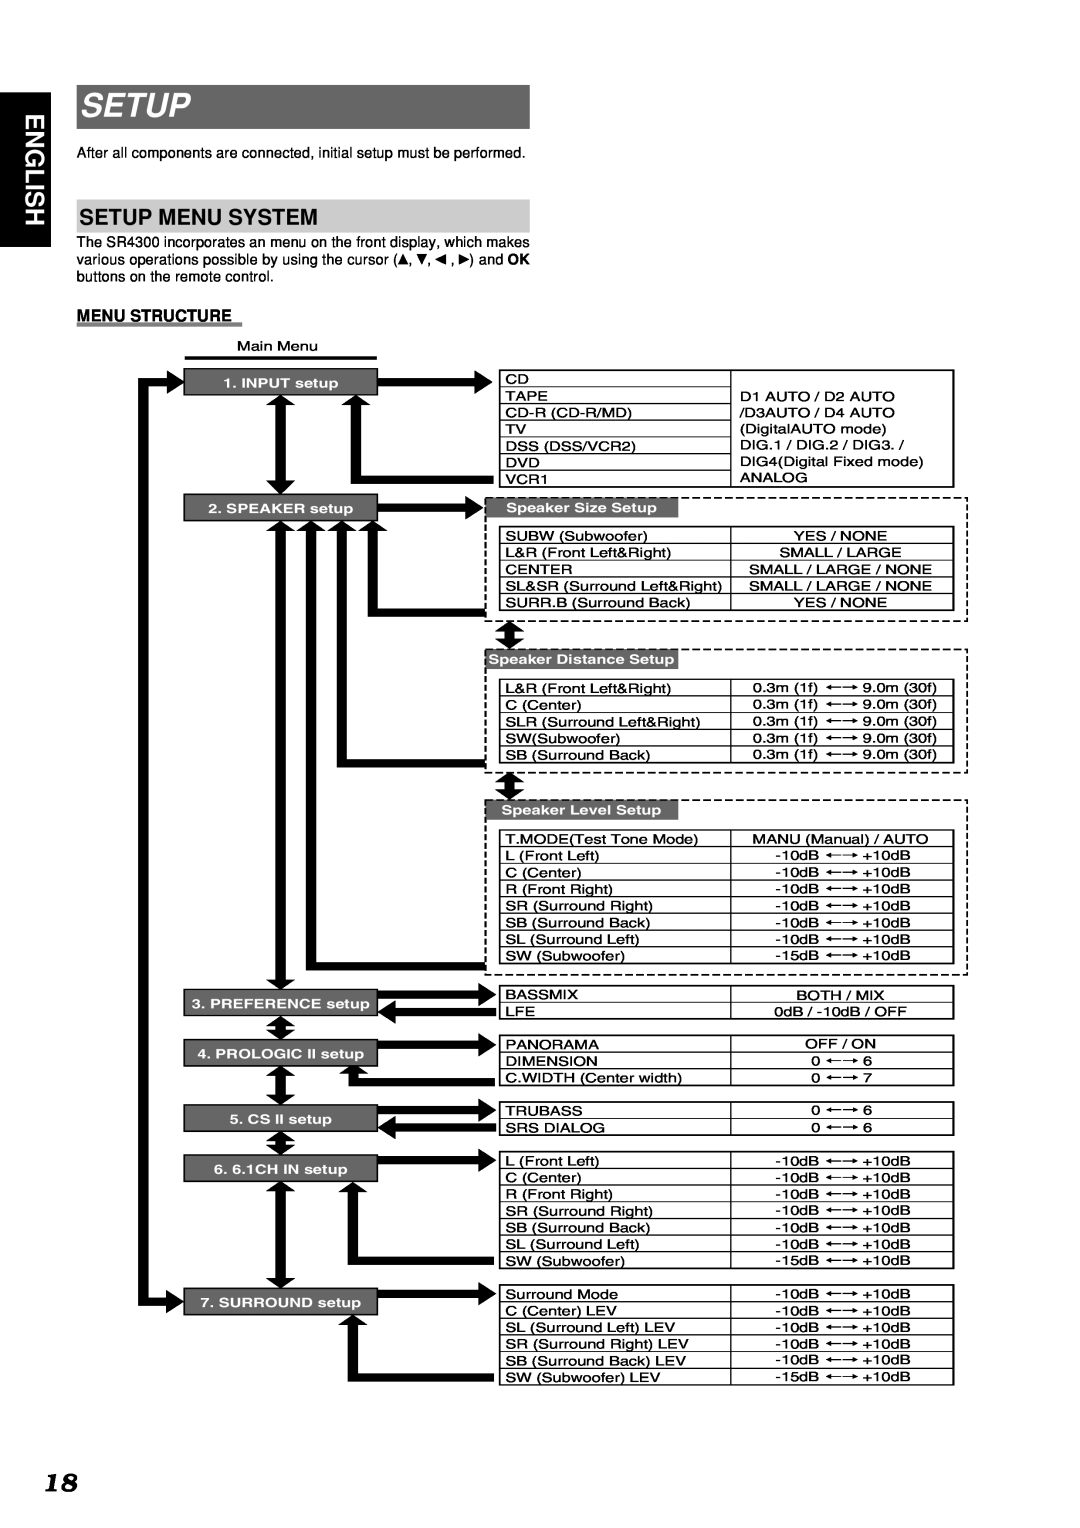 Marantz SR4300 manual English, Setup Menu System, Menu Structure 